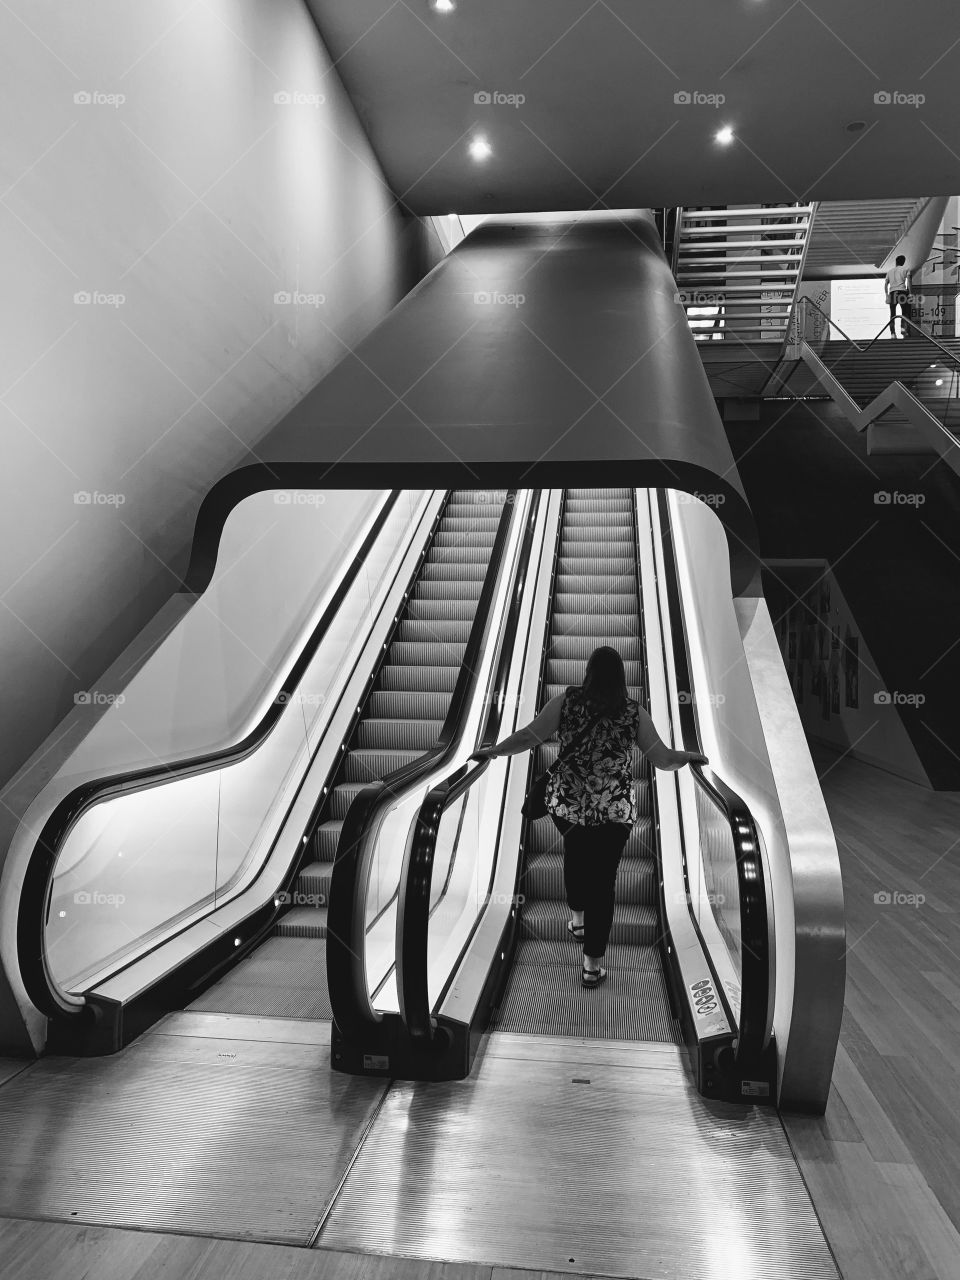 Amsterdam Stedeljk Museum: Escalator to Art